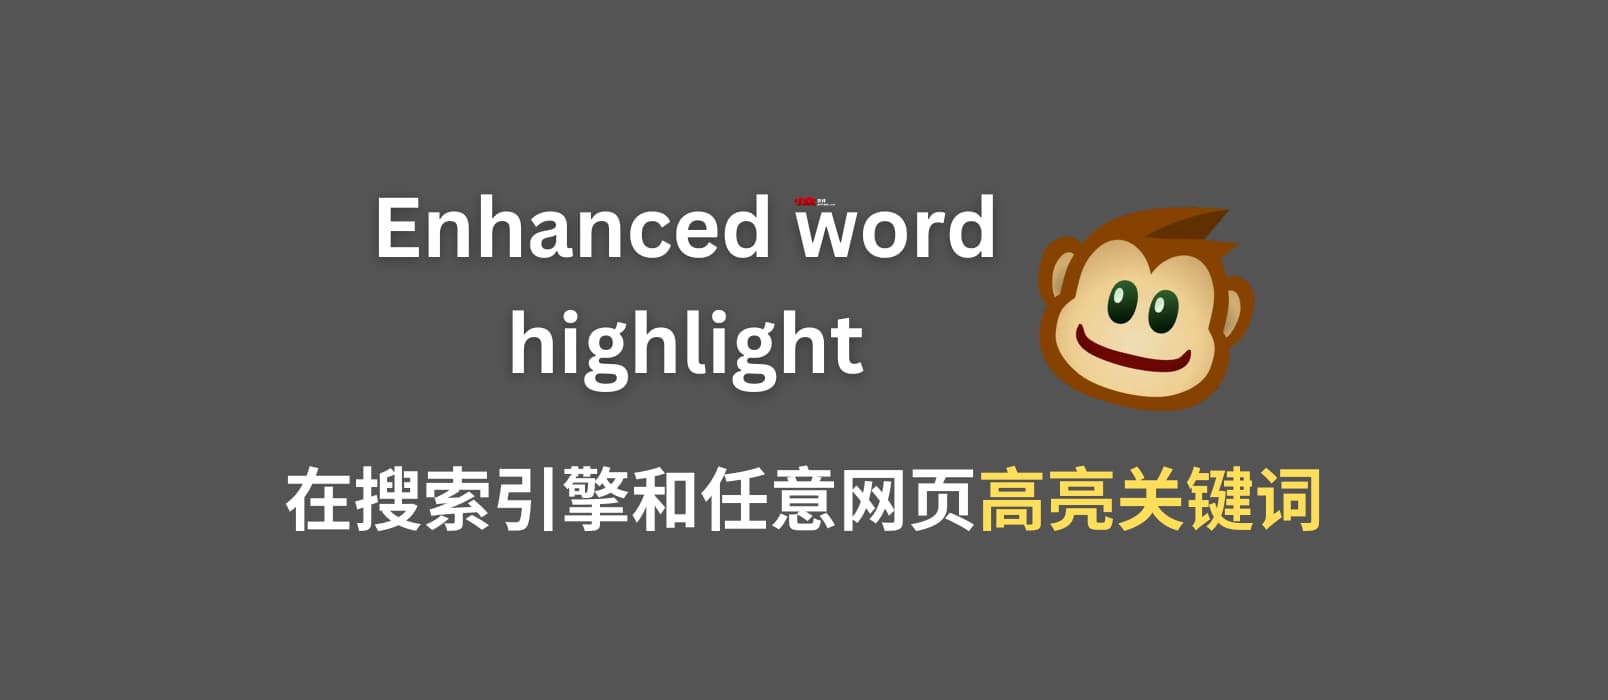 Enhanced word highlight - 创建10年的油猴脚本又更新了：在搜索引擎和网页高亮关键词 14